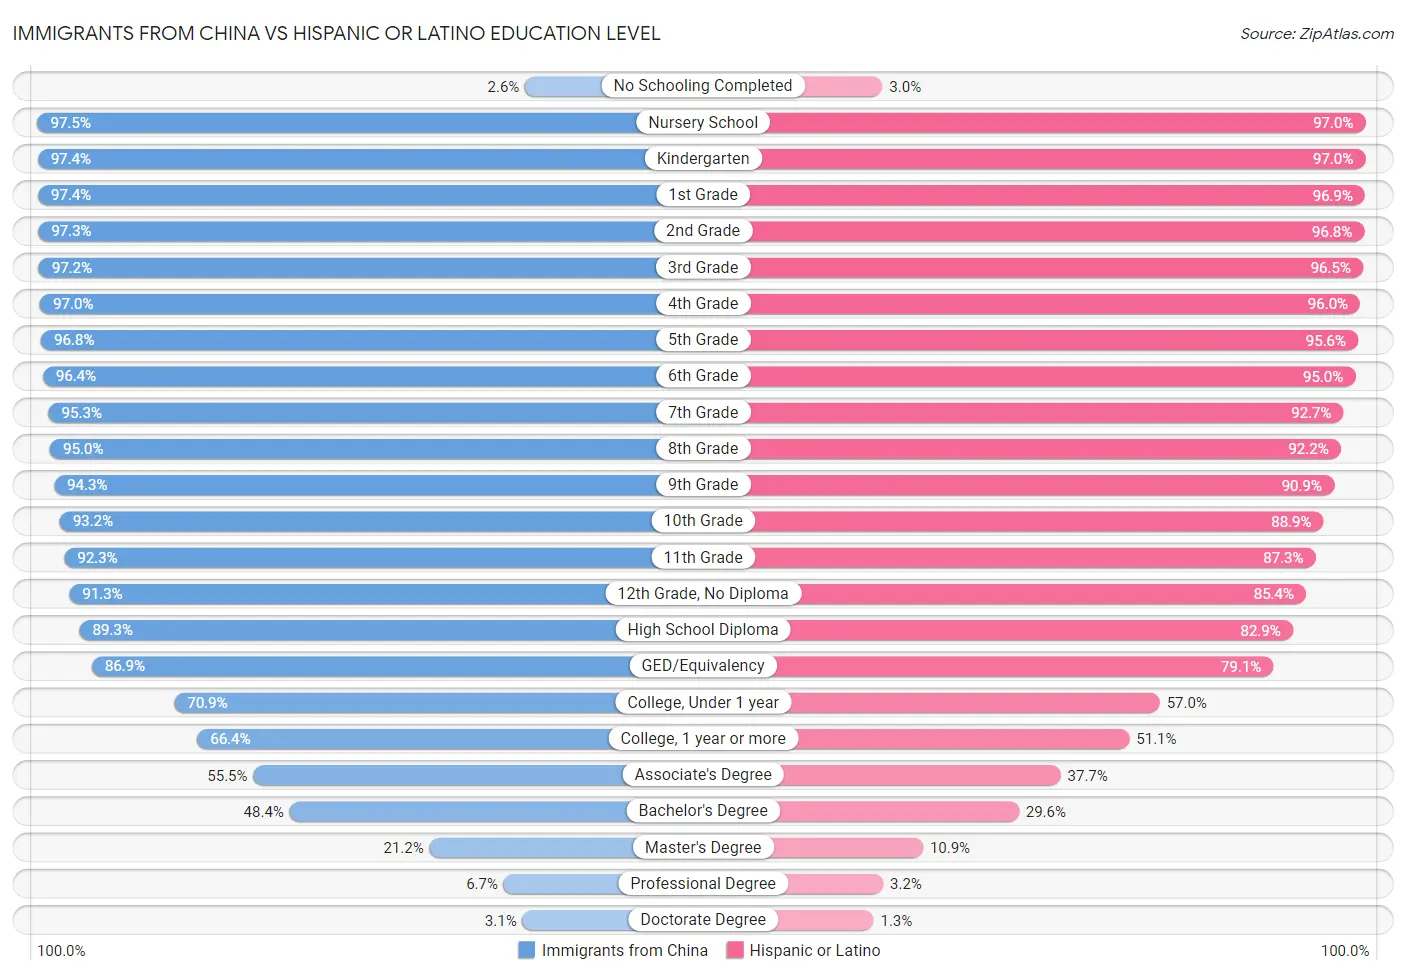 Immigrants from China vs Hispanic or Latino Education Level